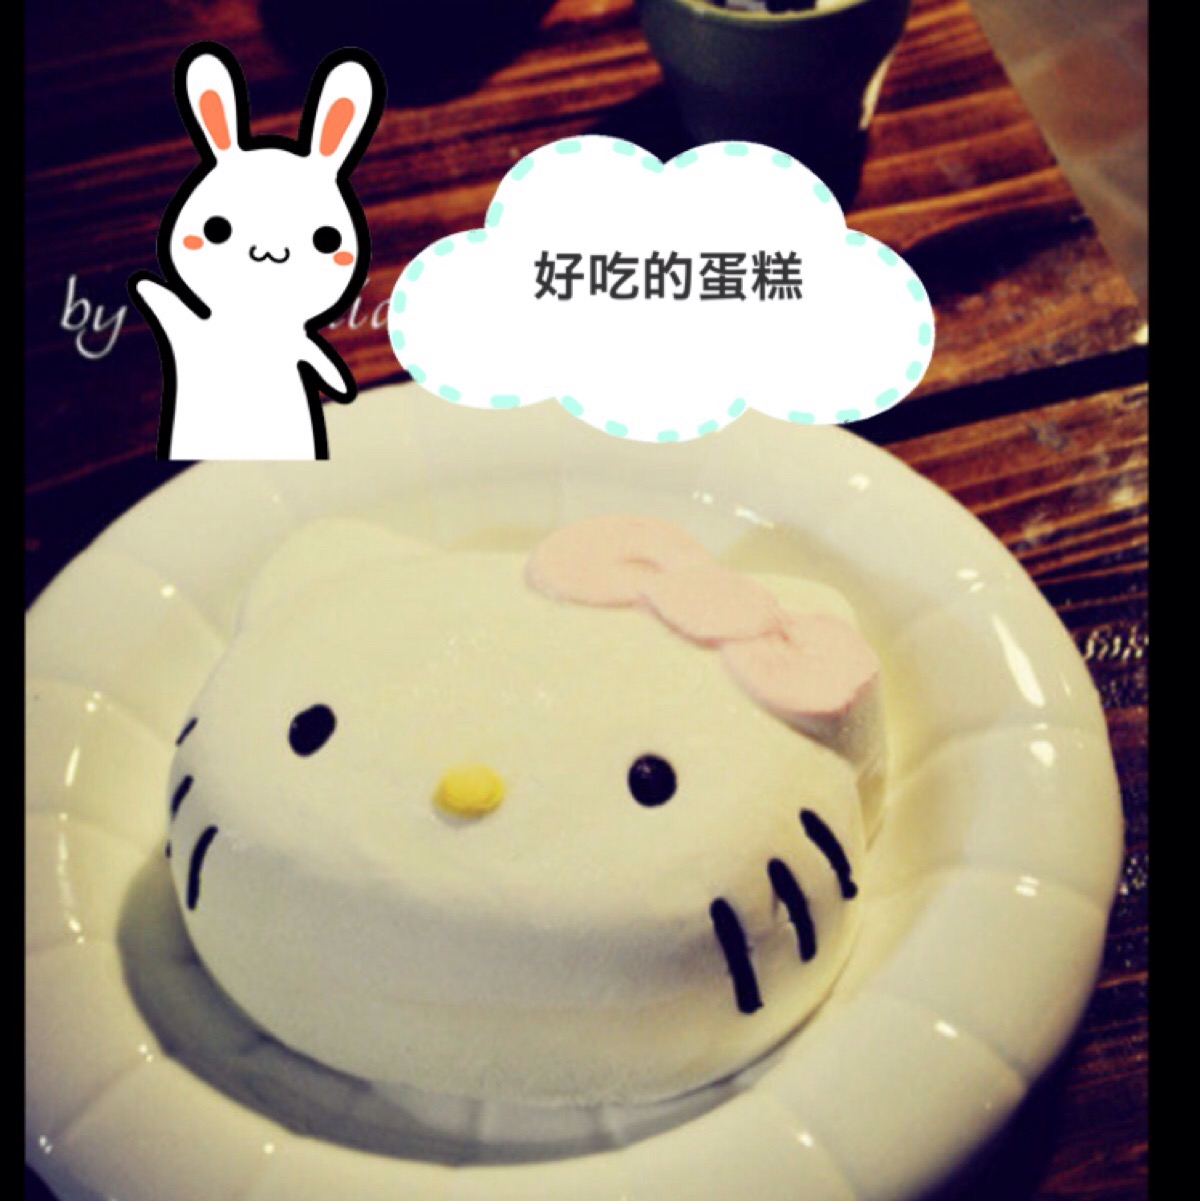 hellokitty蛋糕,eotty猫蛋糕,eotty翻糖蛋糕_大山谷图库